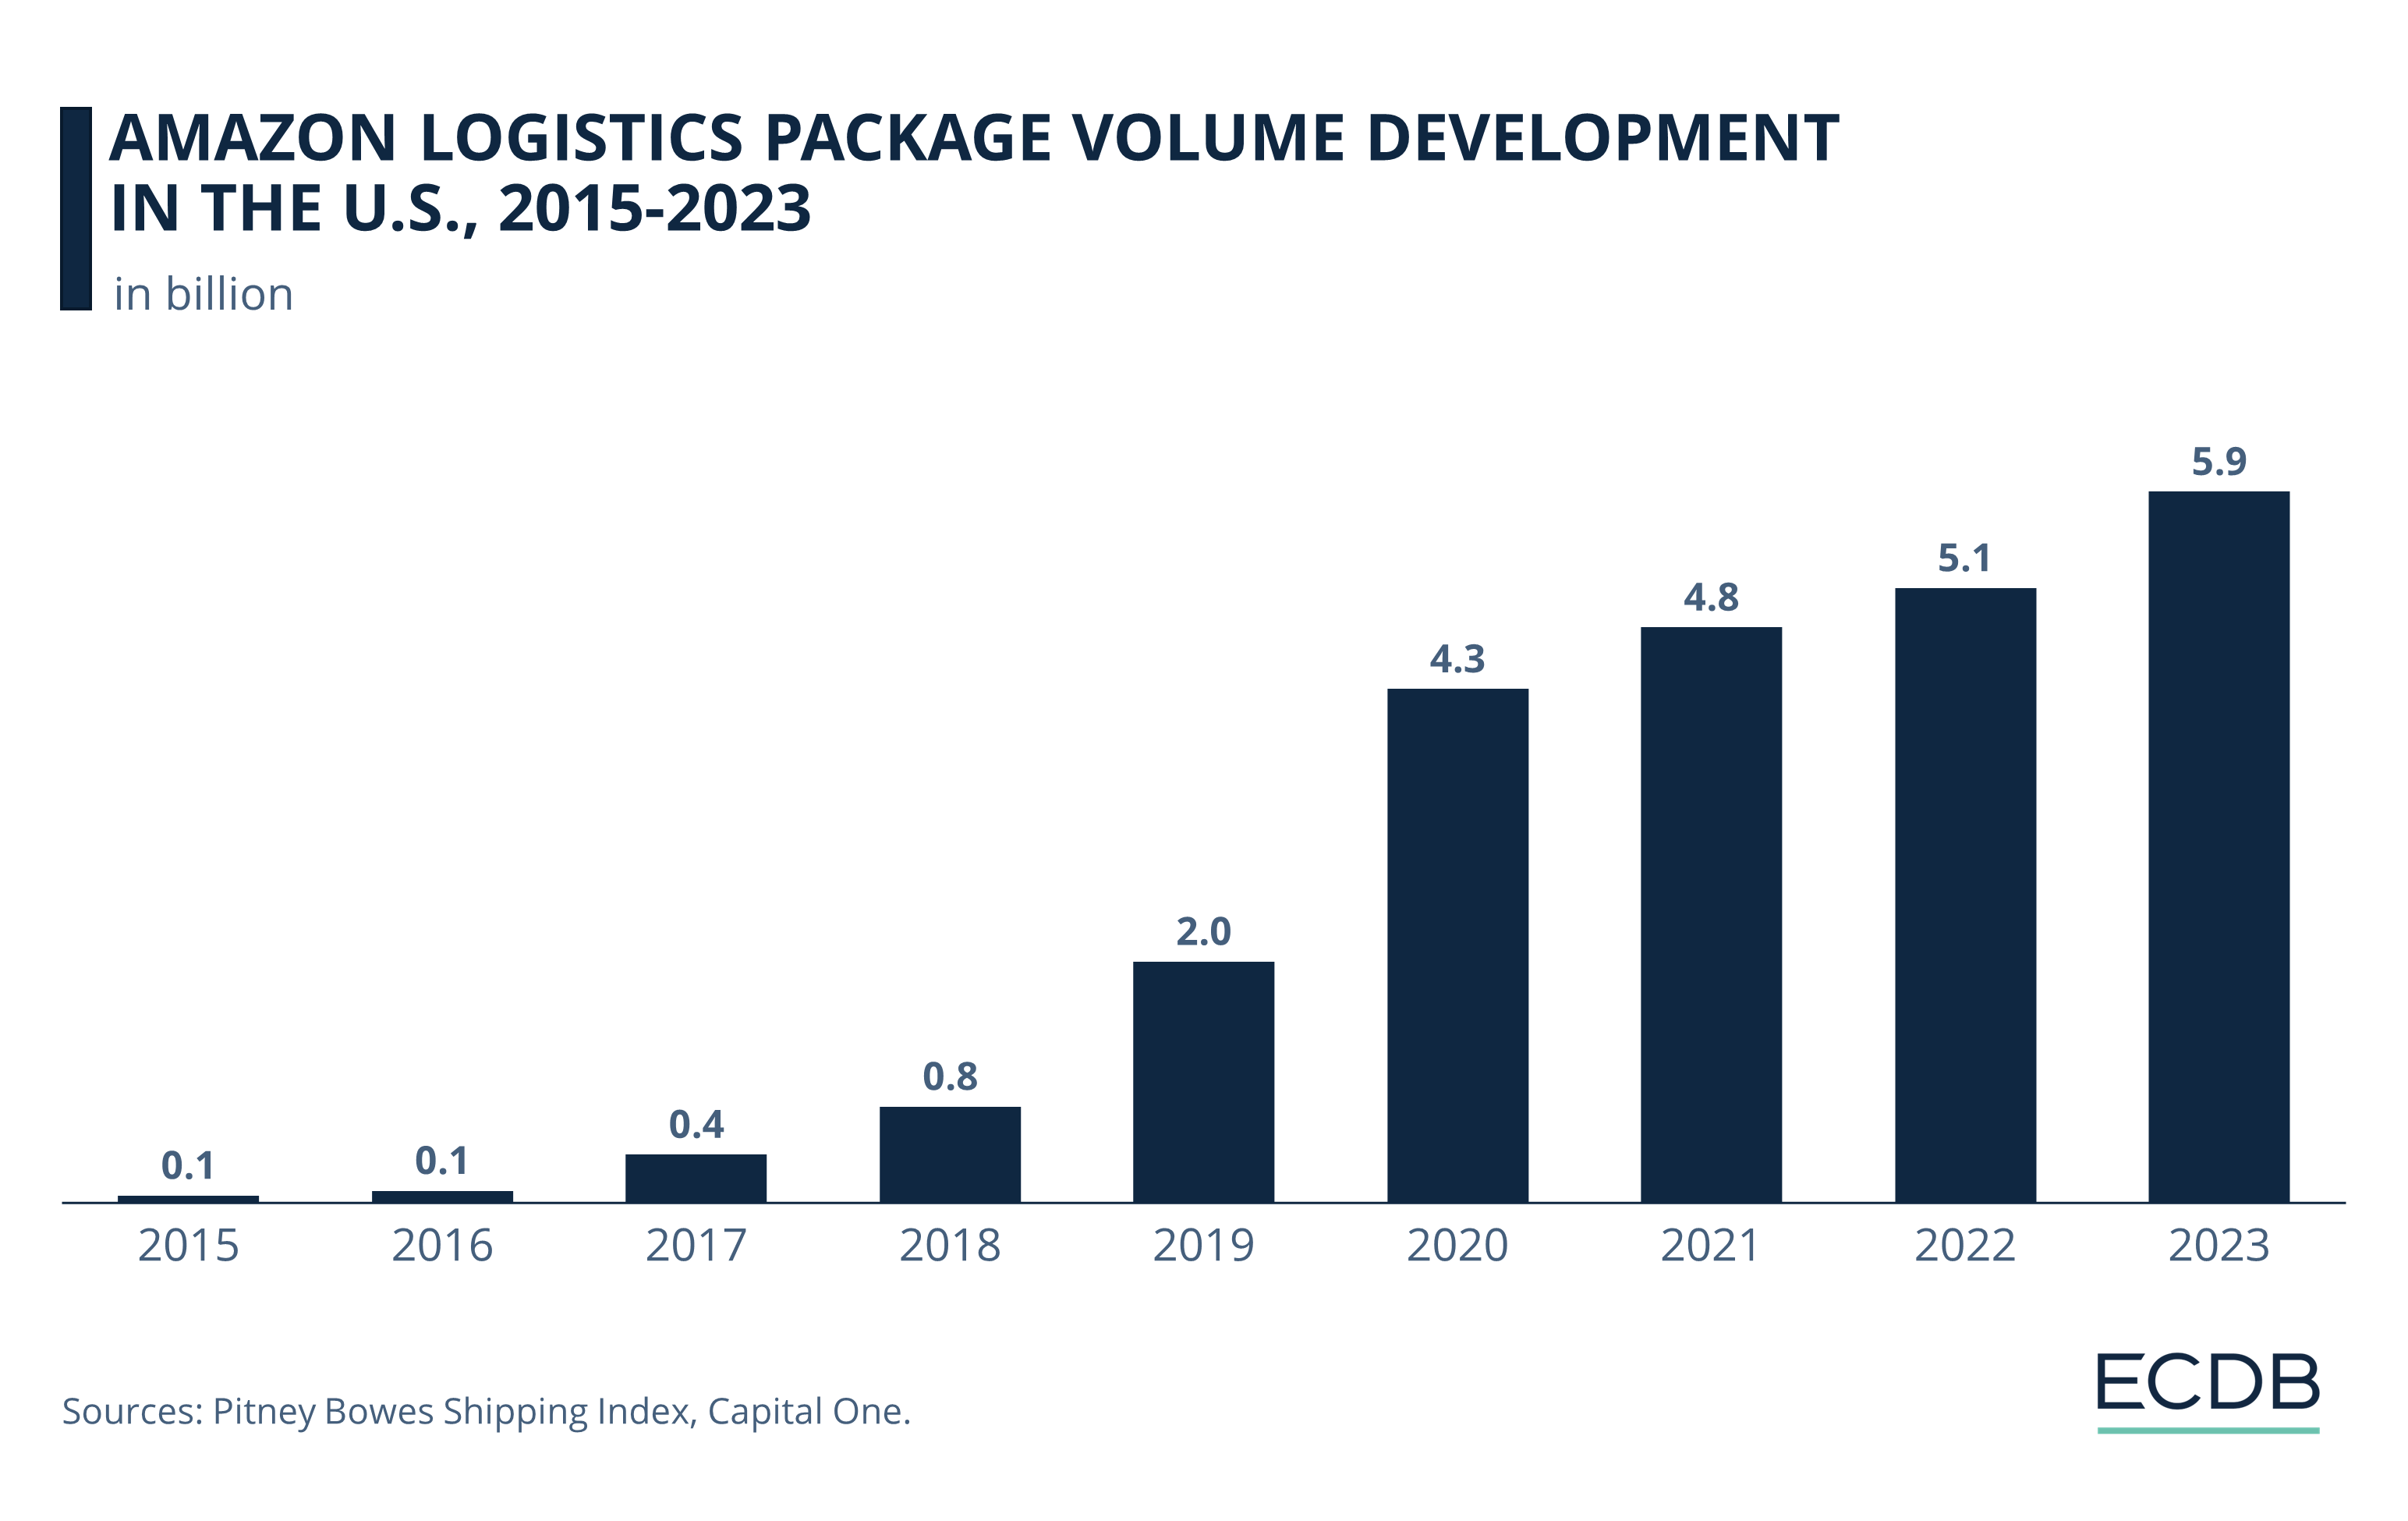 Amazon Logistics Package Volume Development in the U.S., 2015-2023